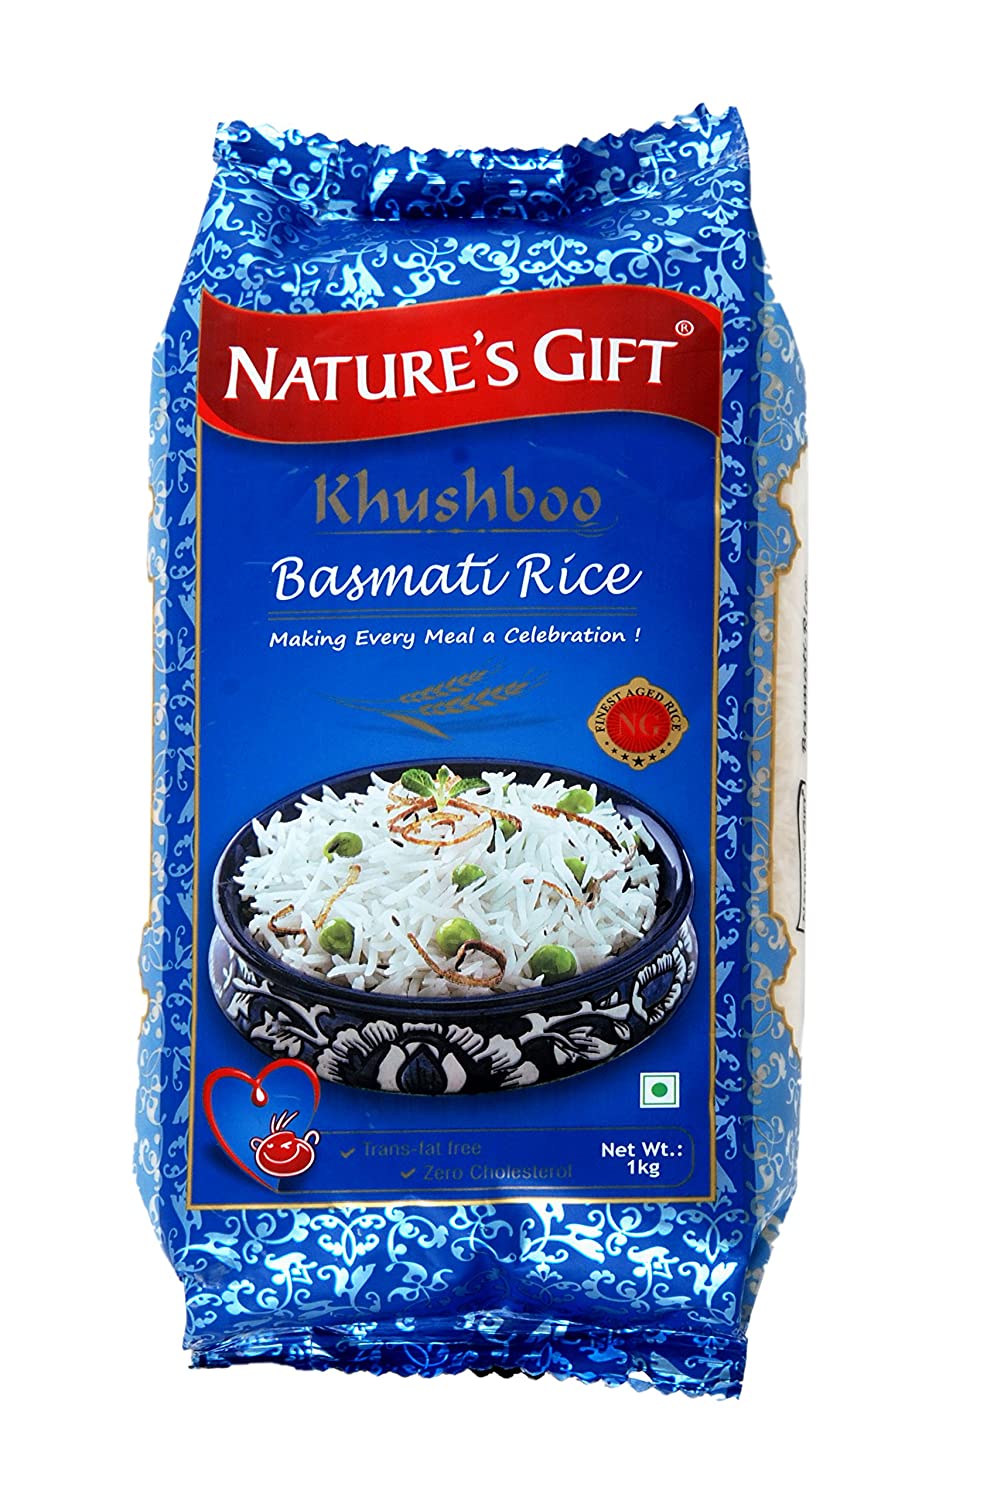 Nature's Gift Khushboo Basmati Rice 1kg